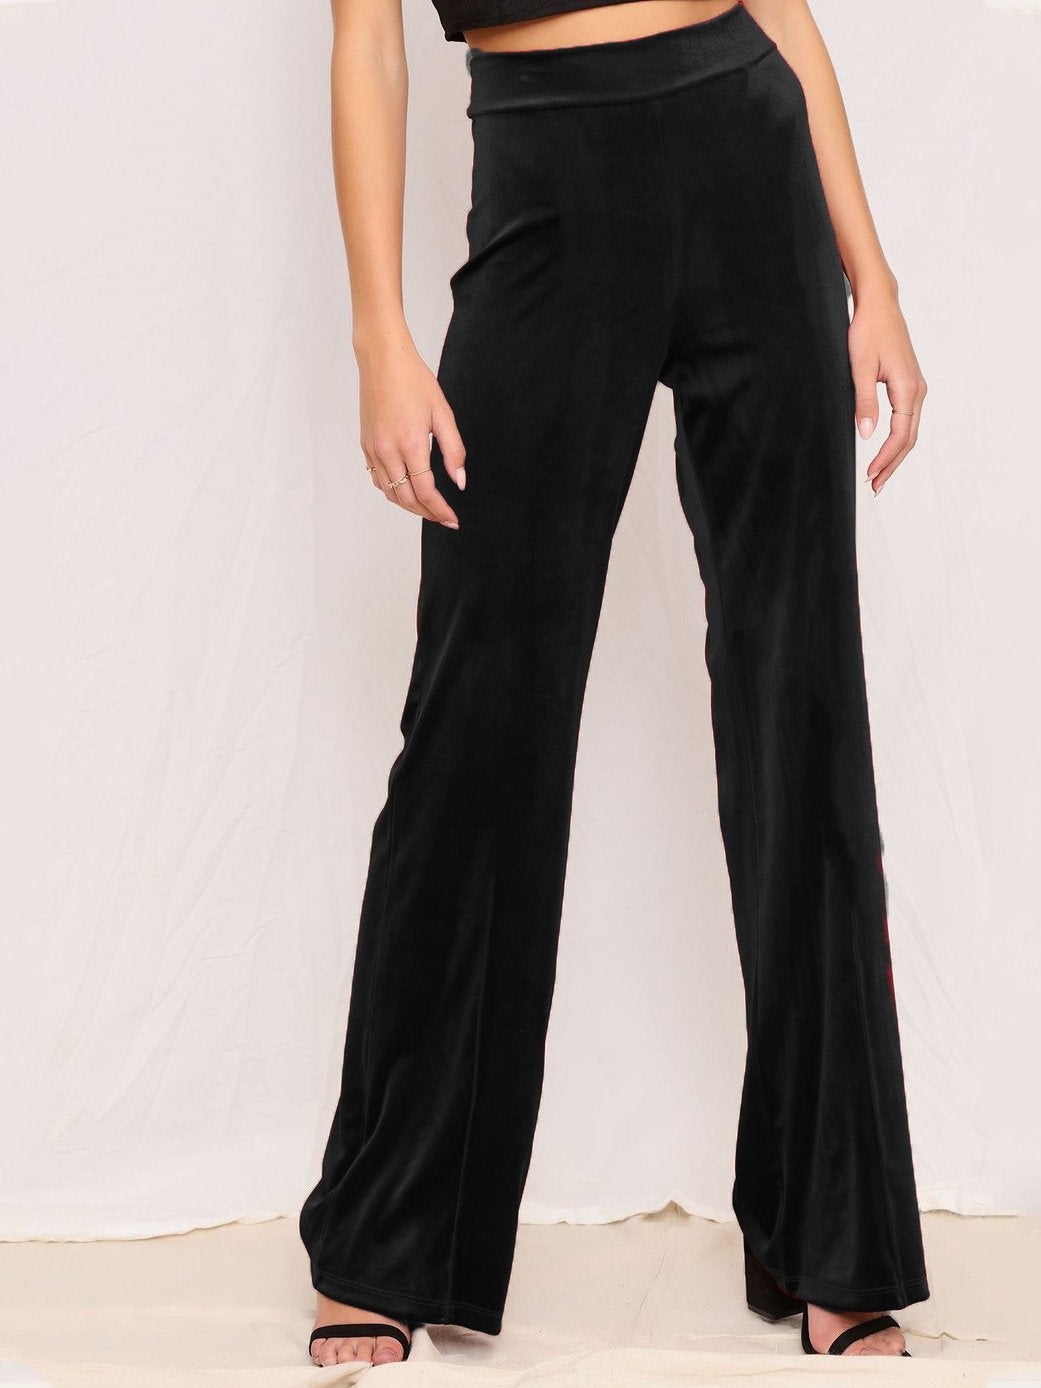 Women's Pants Fashion Casual Solid High Waist Elastic Pants